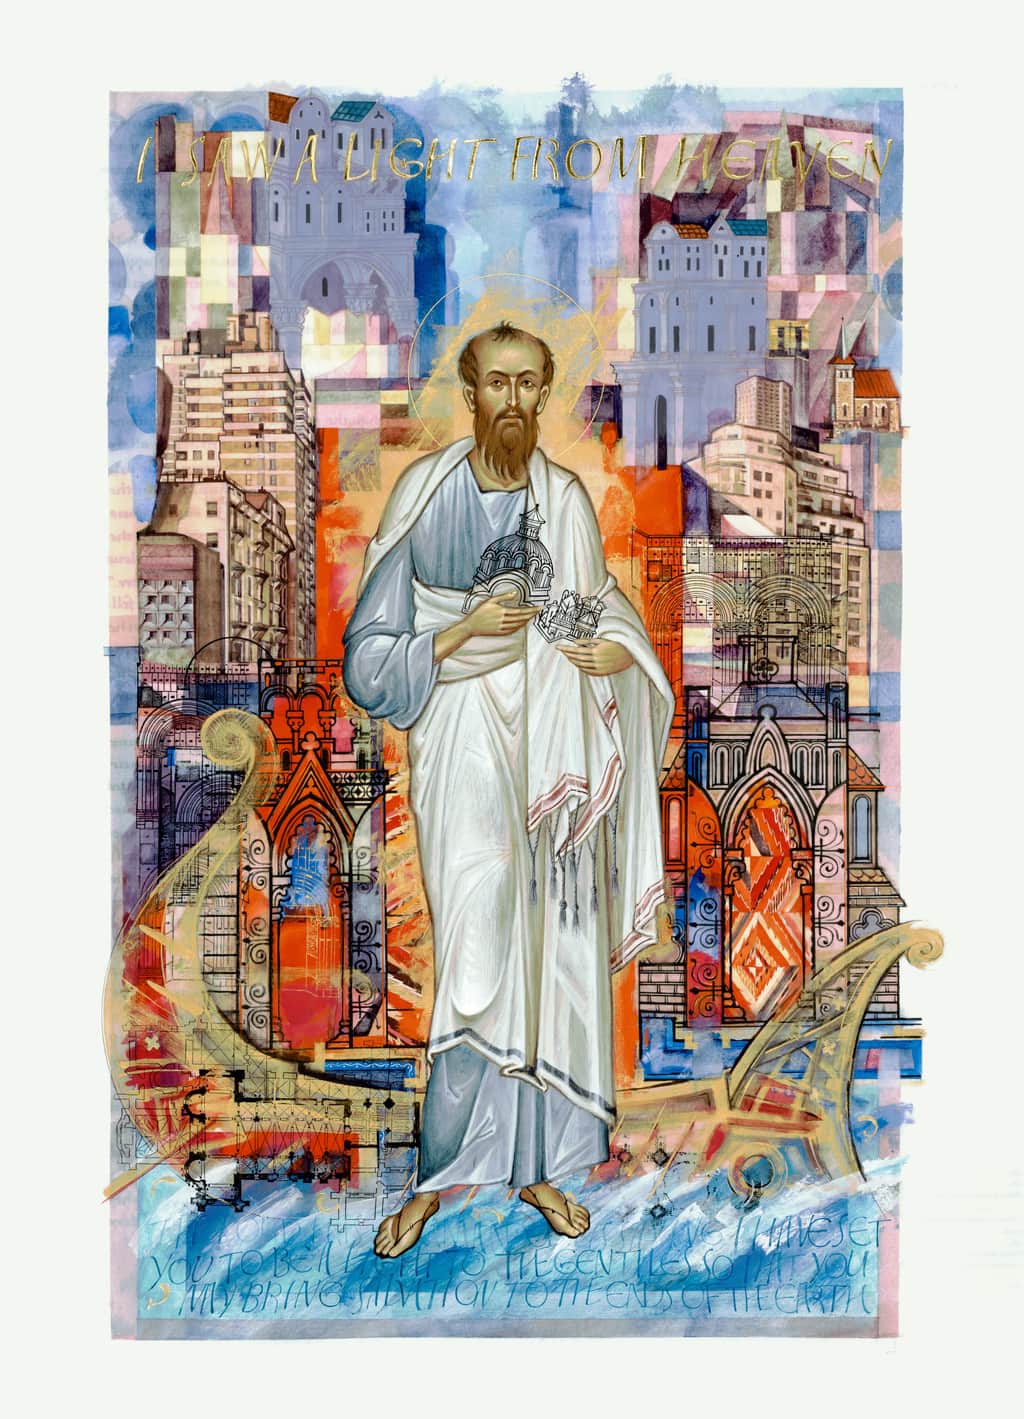 The Saint John's Bible, "Life of Paul" illumination 